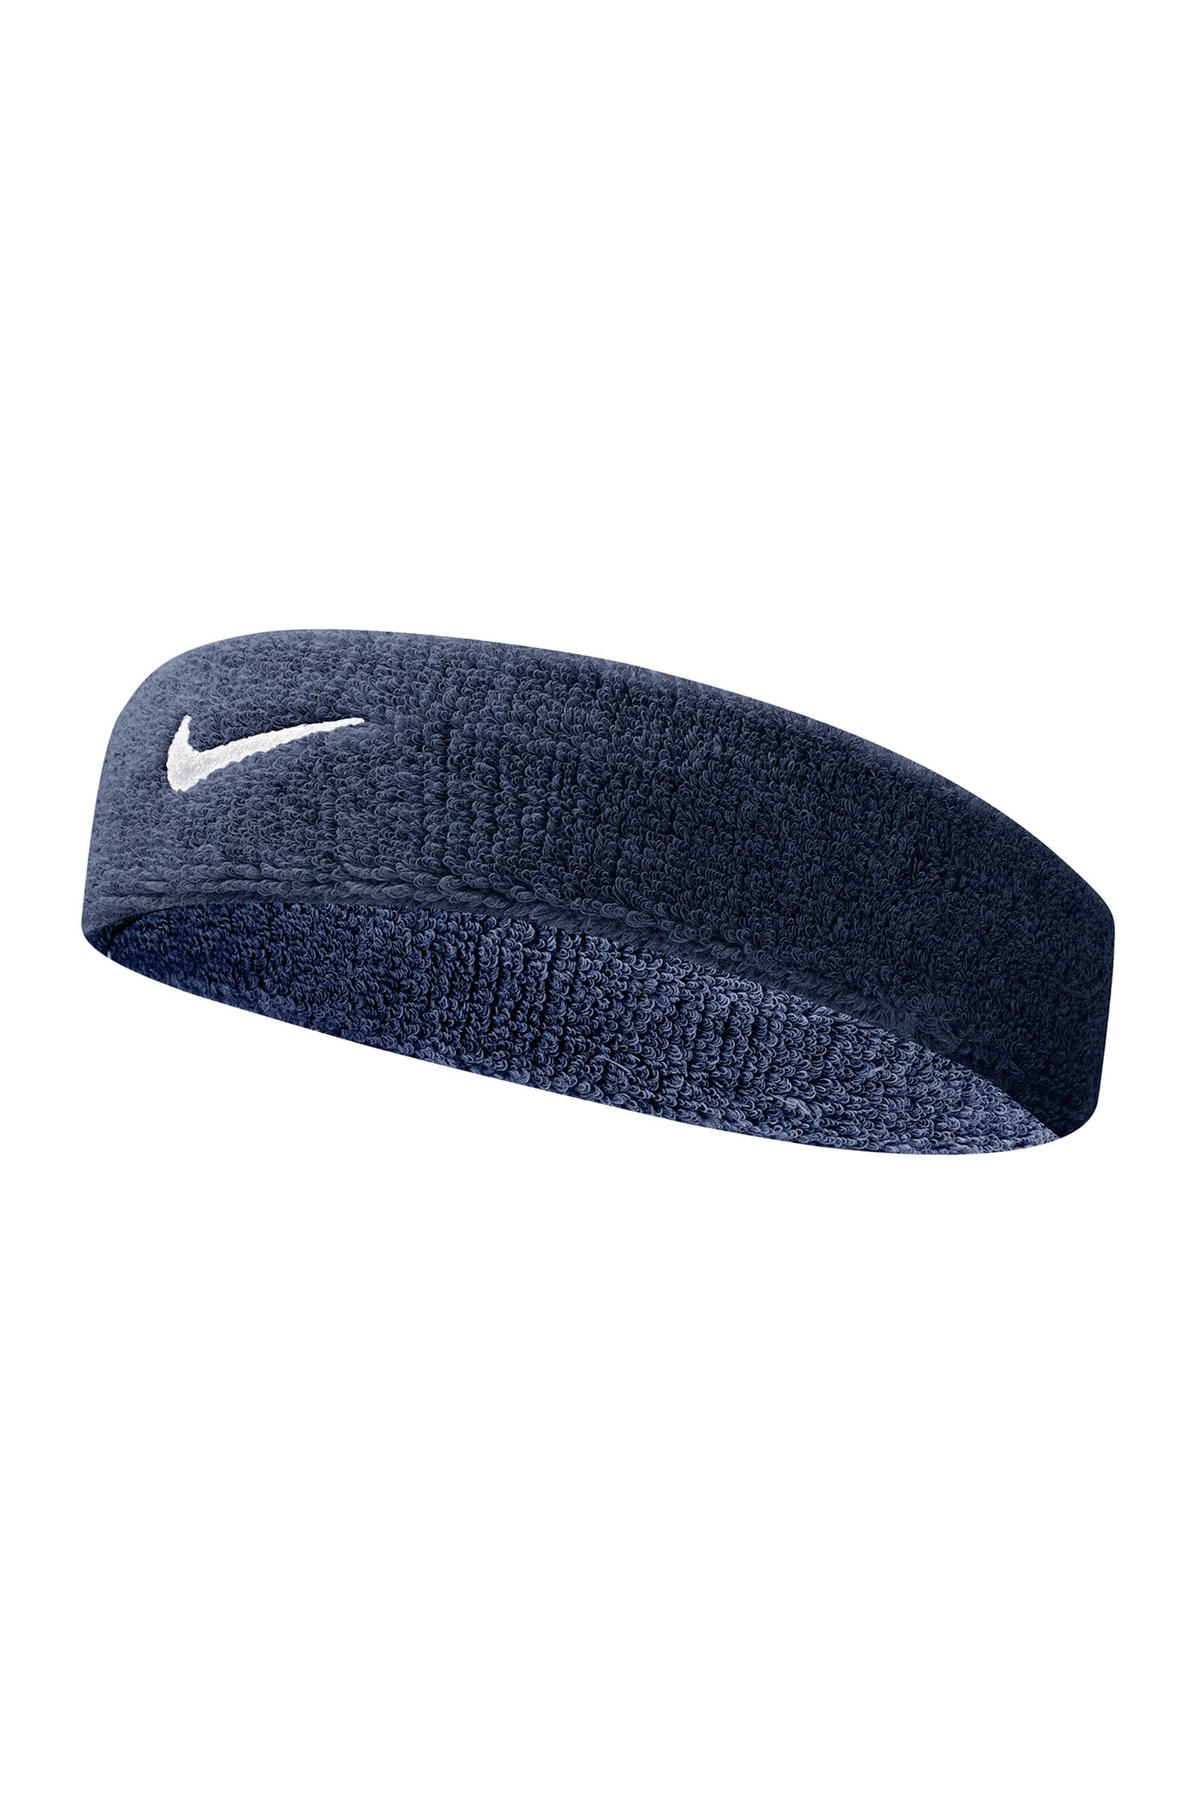 Lol leven openbaring Nike hoofdband Swoosh donkerblauw/wit | wehkamp